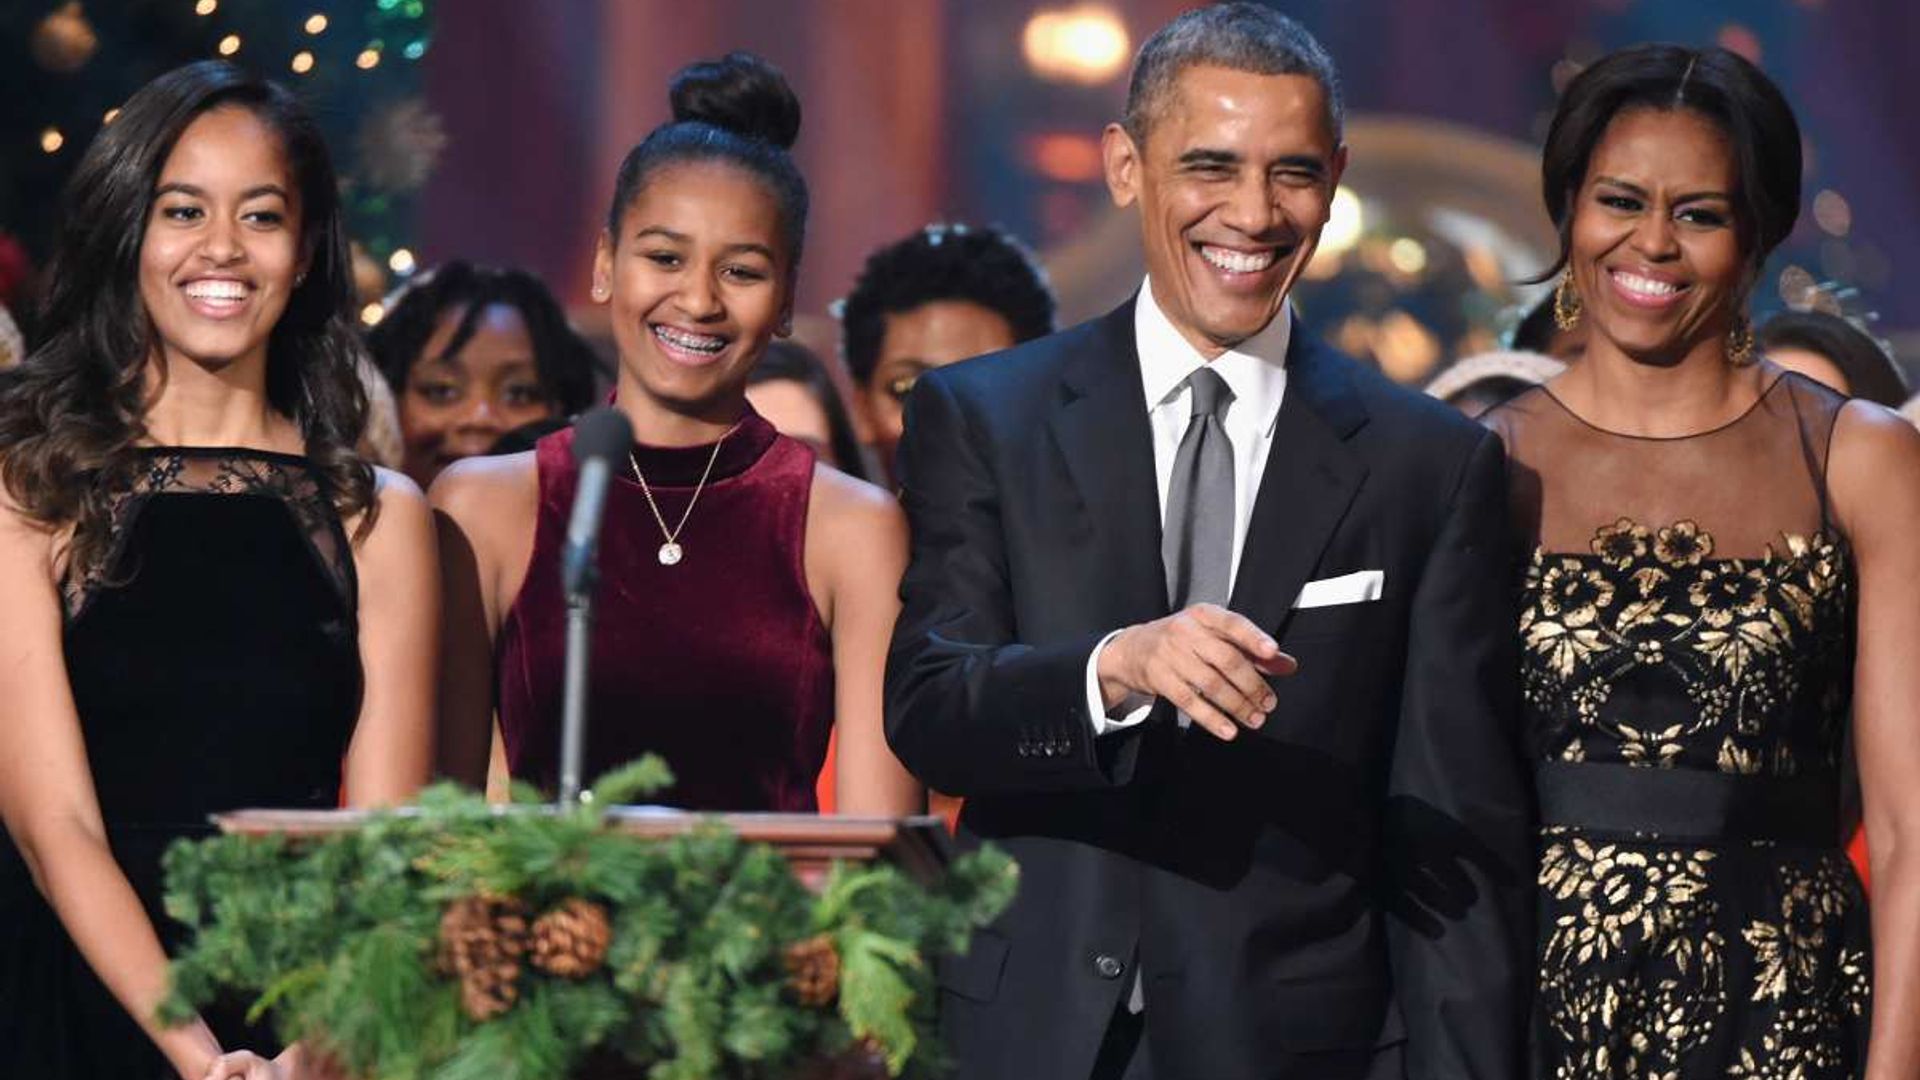 Michelle Obama shares rare photo of daughter Malia to mark a double celebration